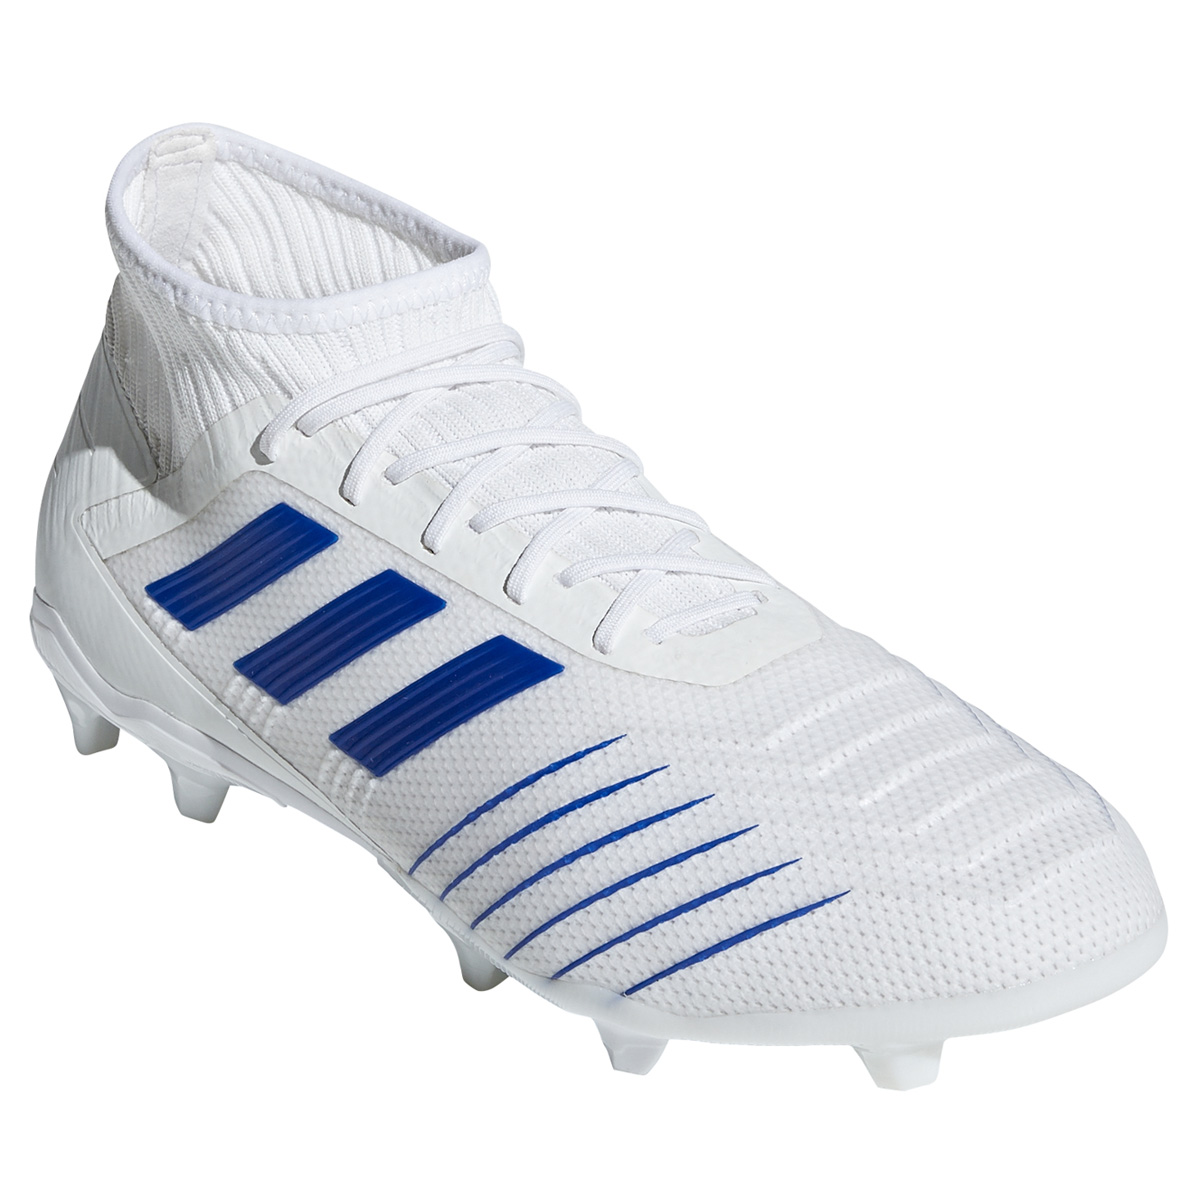 adidas Predator 19.2 FG Soccer Shoes (White/Bold Blue) @ SoccerEvolution